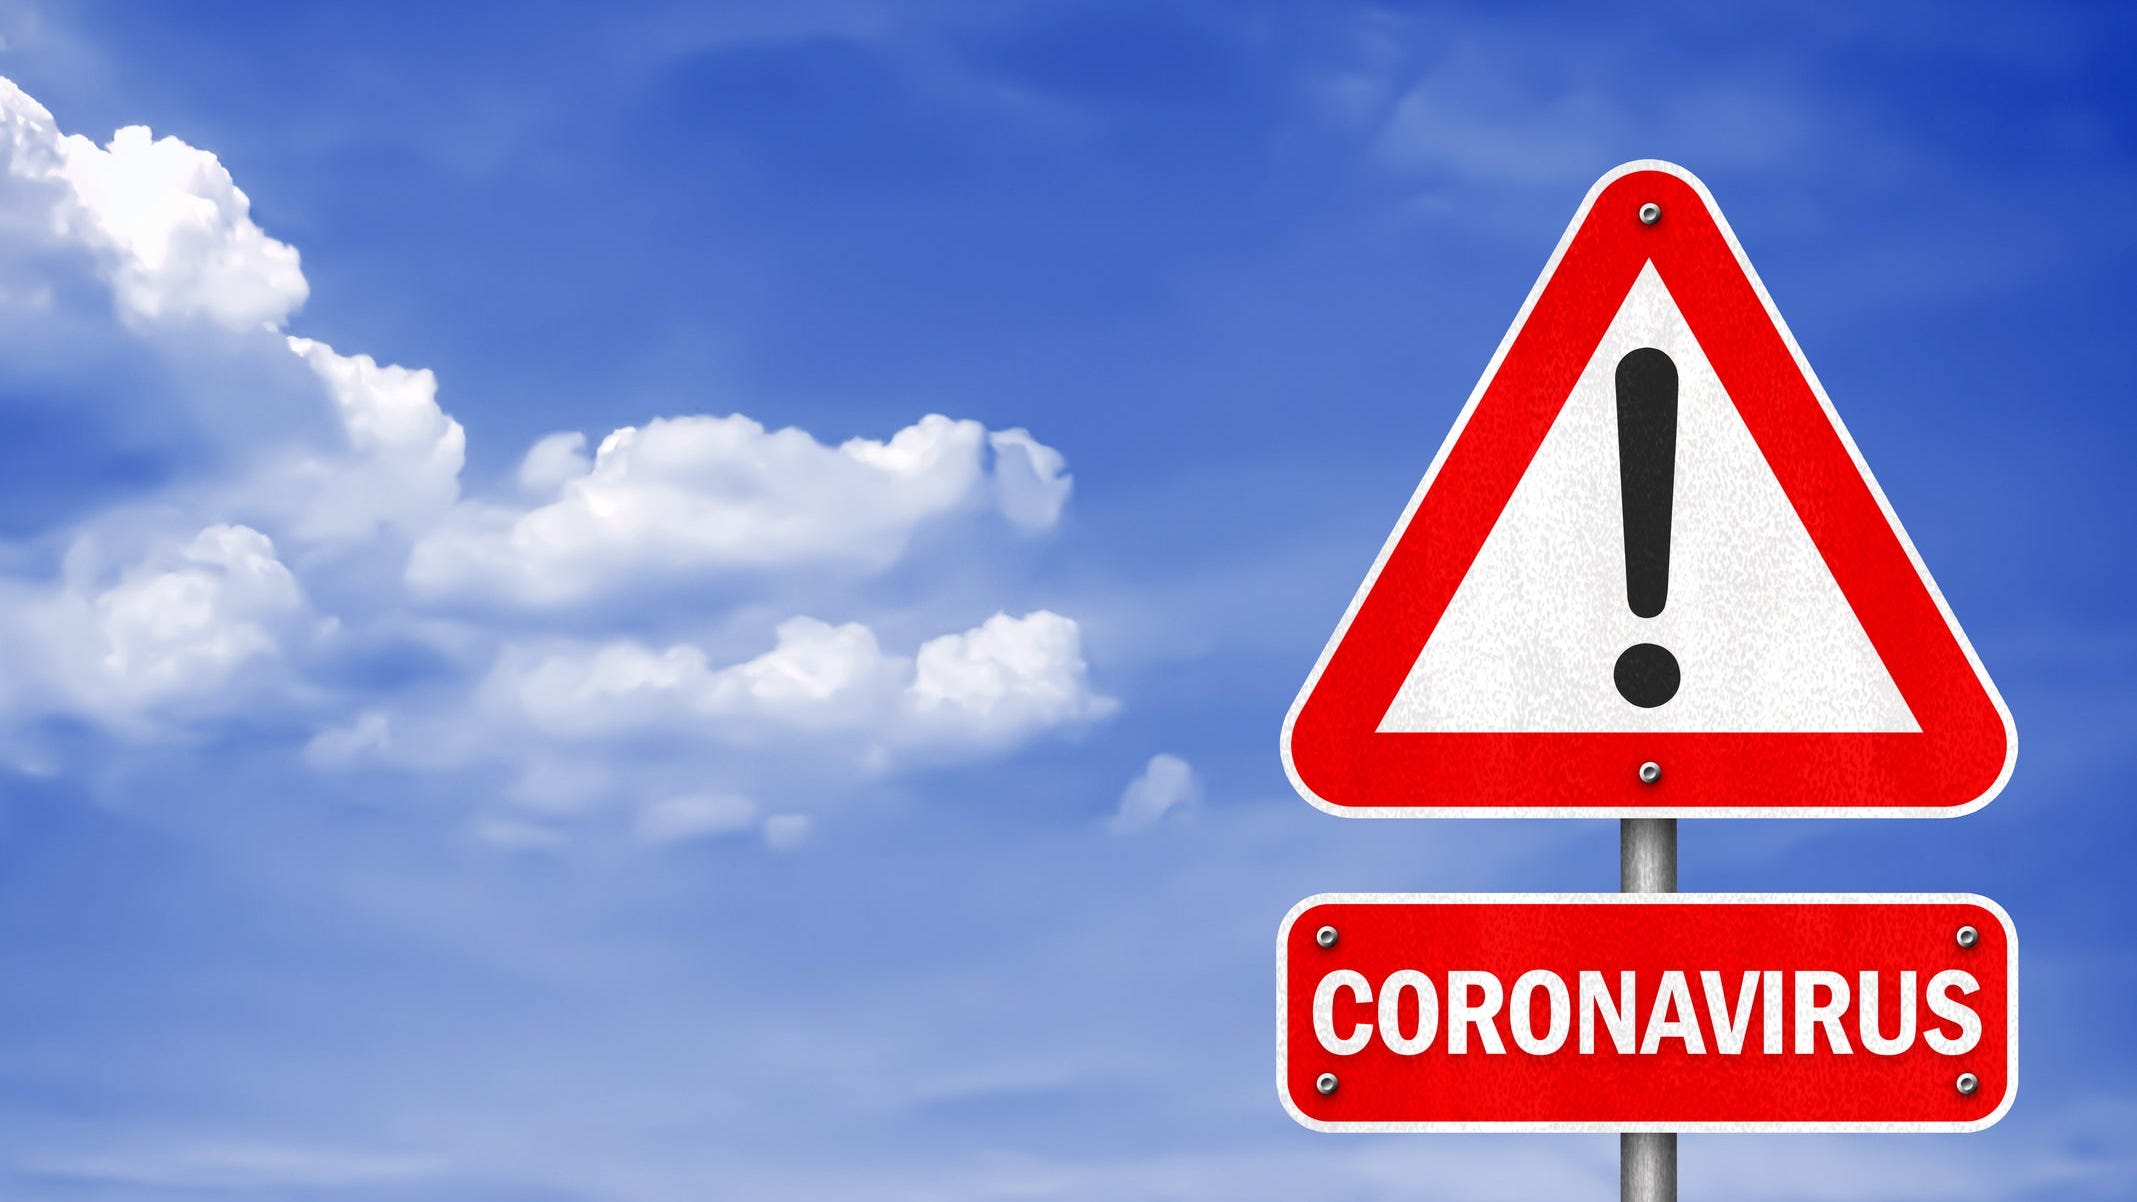 corona virus symptoms in baby